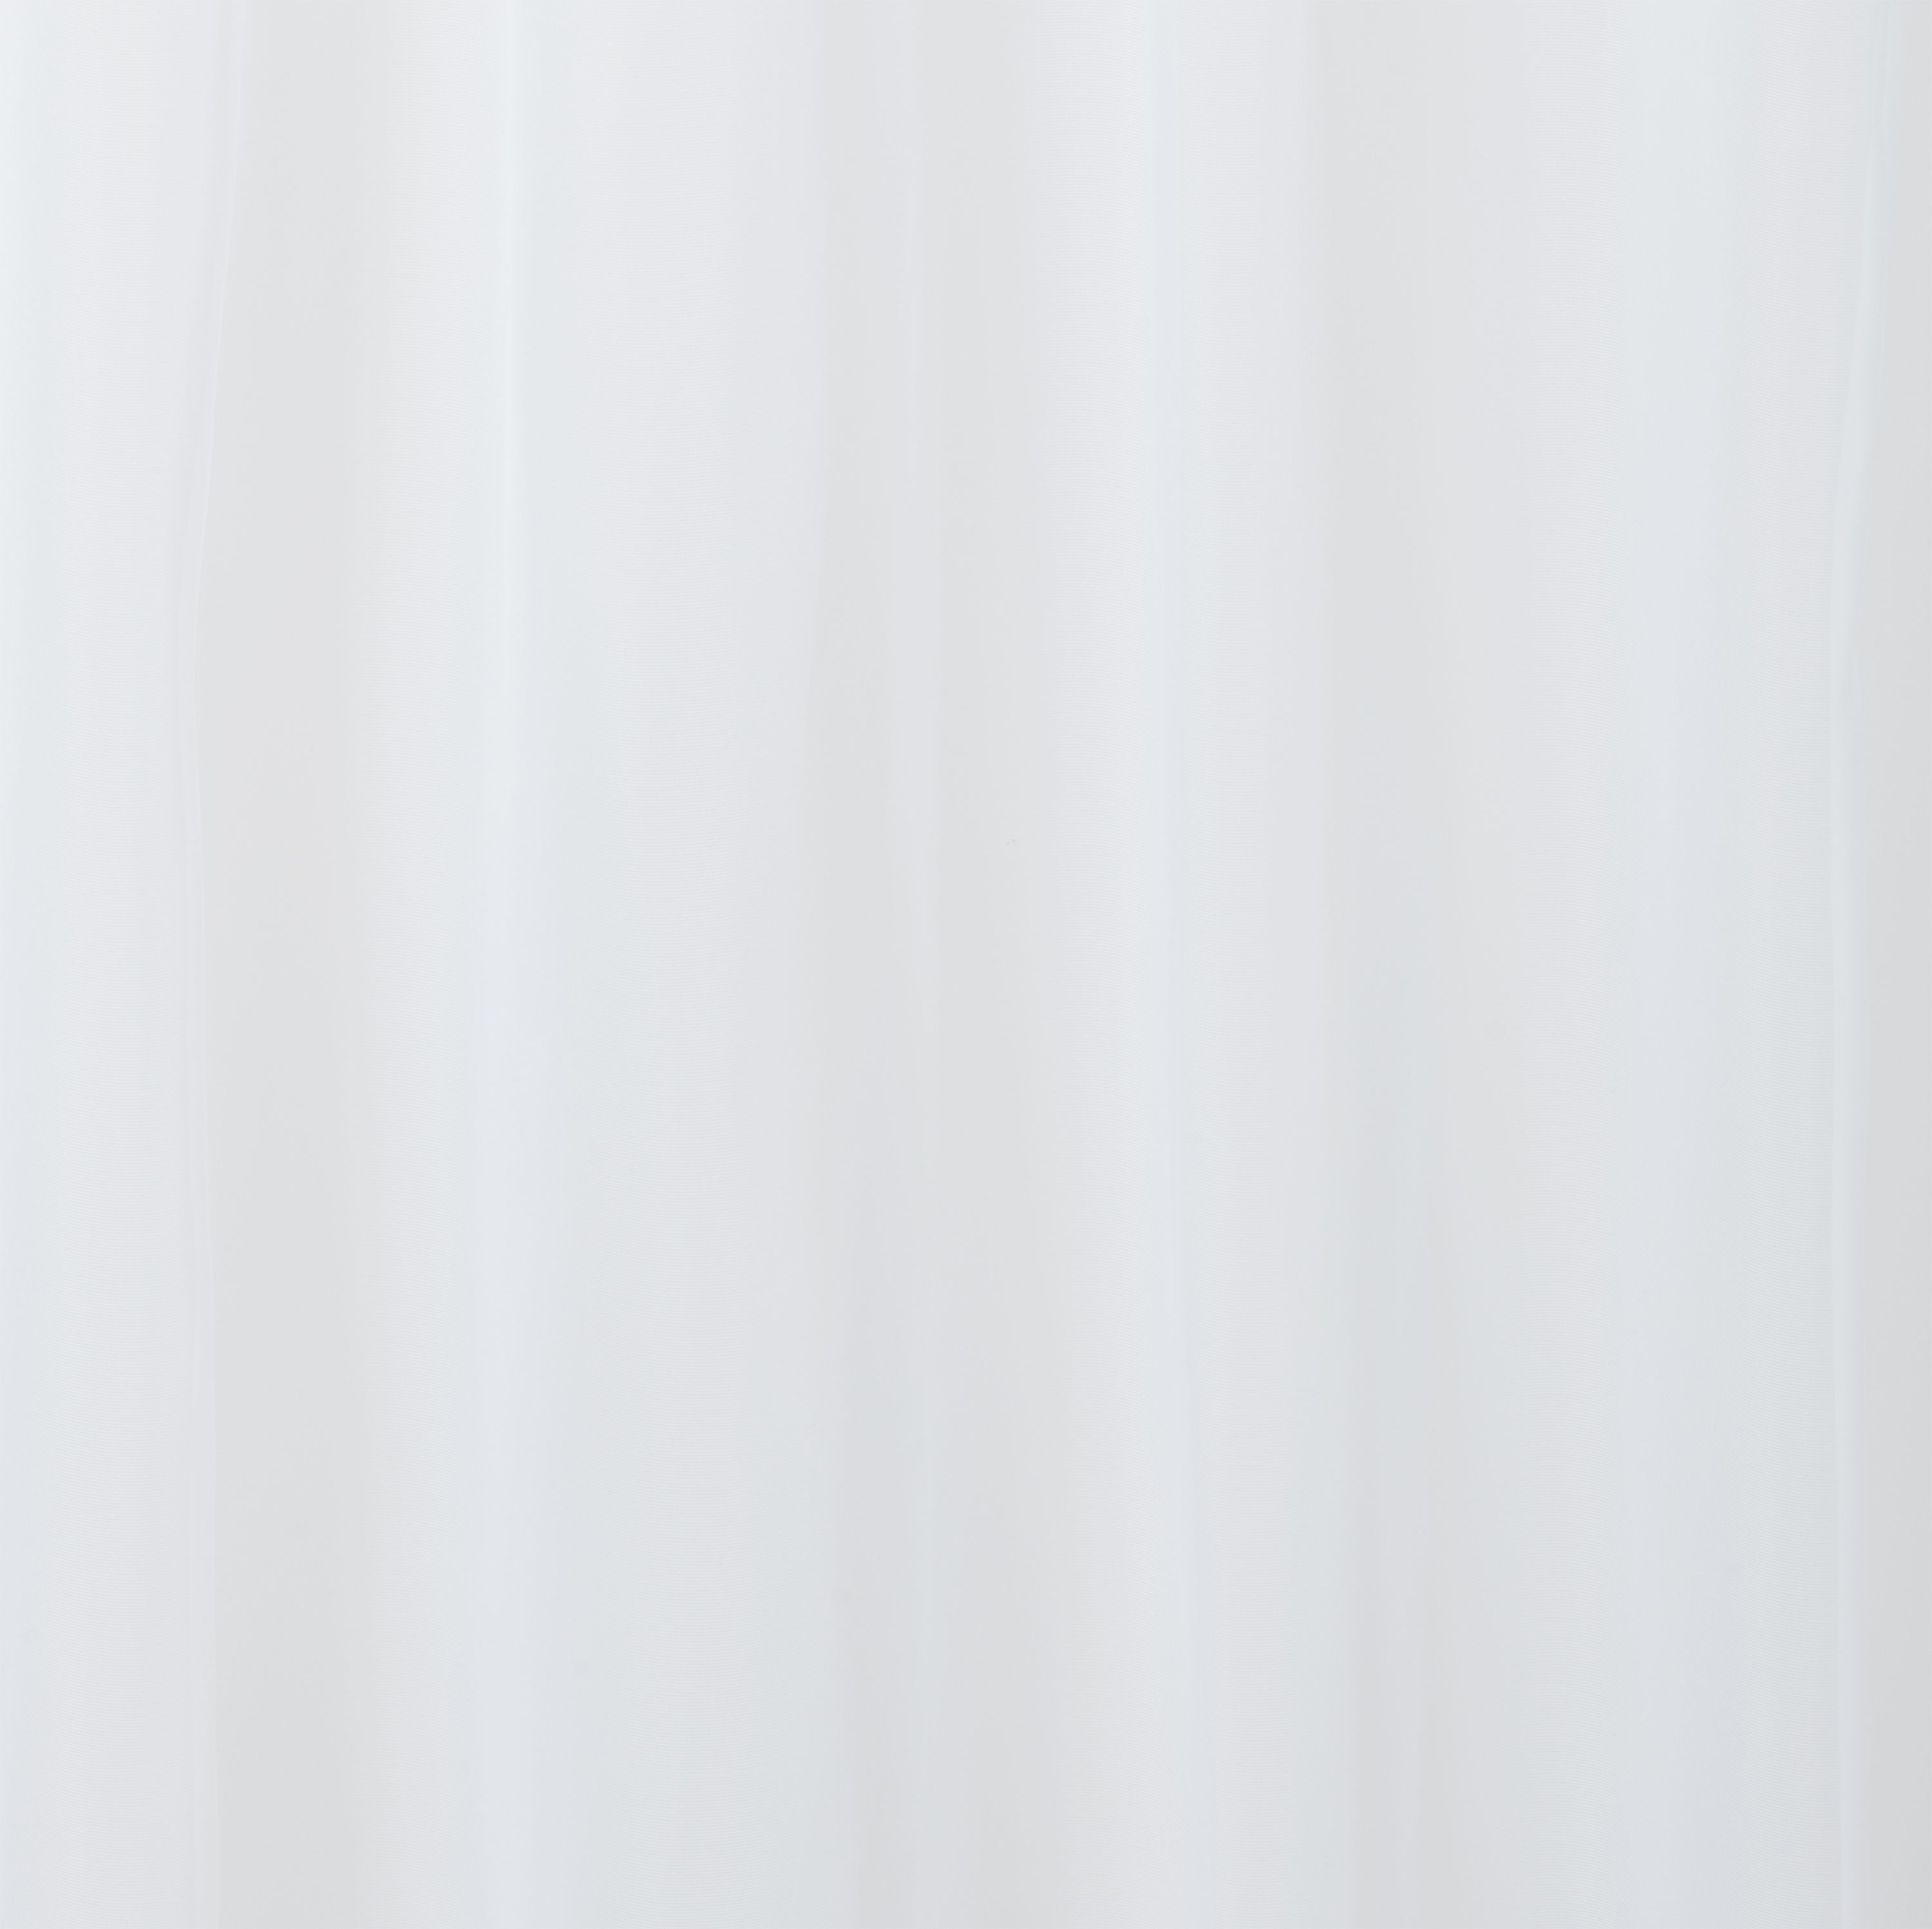 White Plain Daylight Tab top Voile curtain (W)140cm (L)260cm, Single